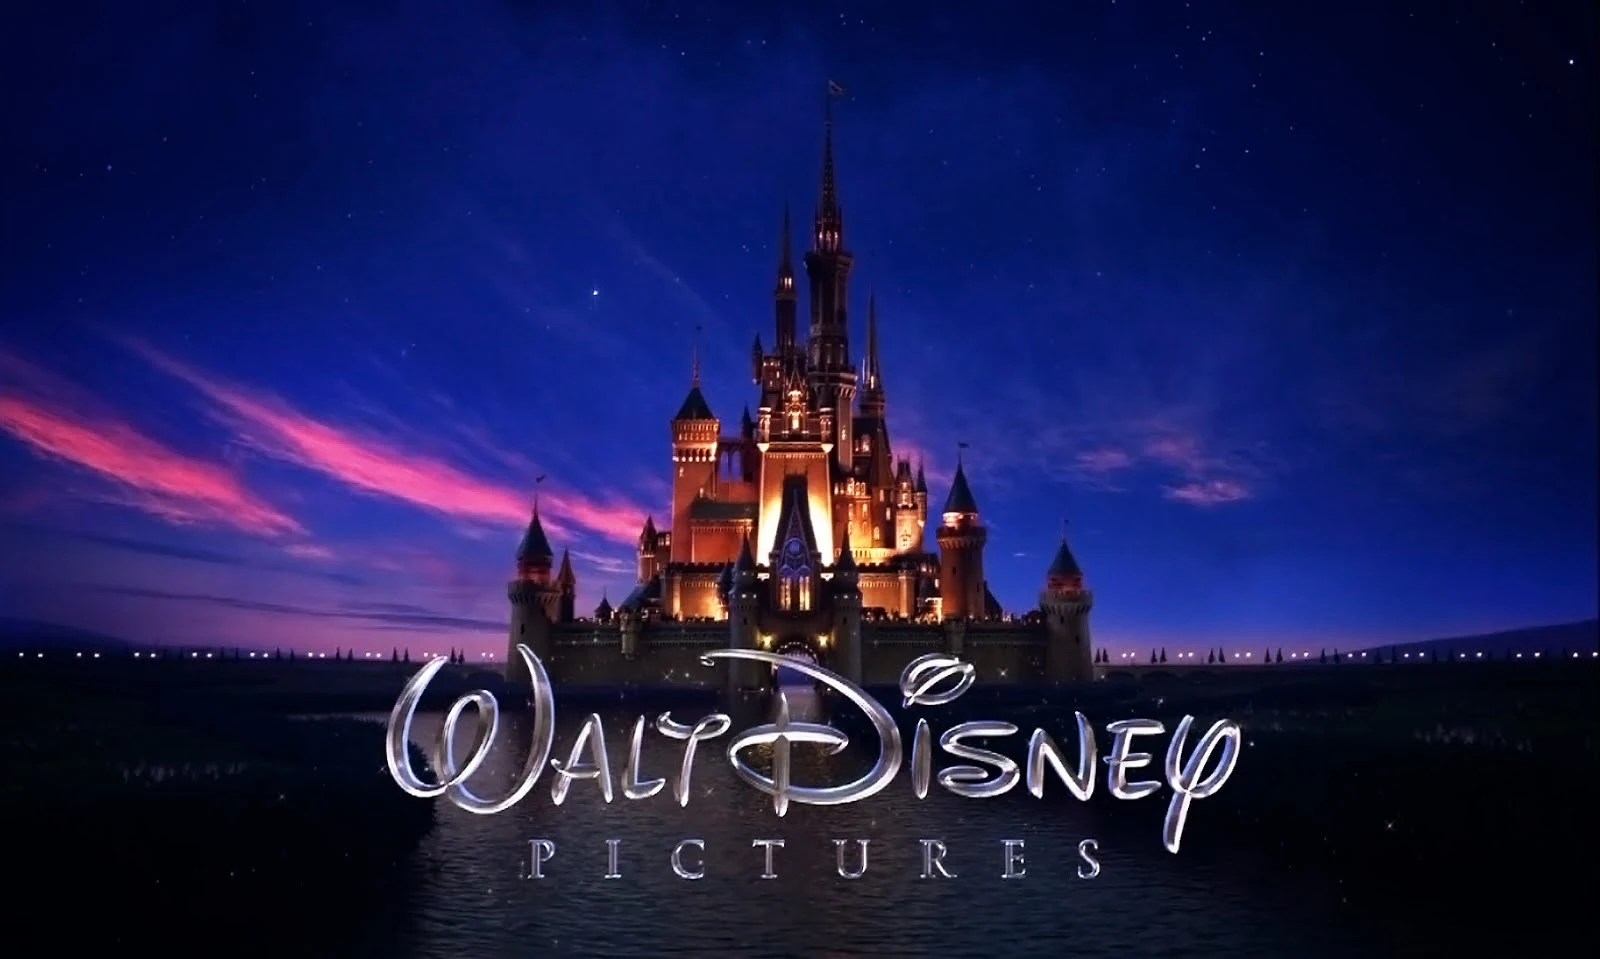 Walt Disney Pictures 로고 뒤로 붉은 노을이 지는 파란 하늘과 주황 빛으로 물든 성의 모습